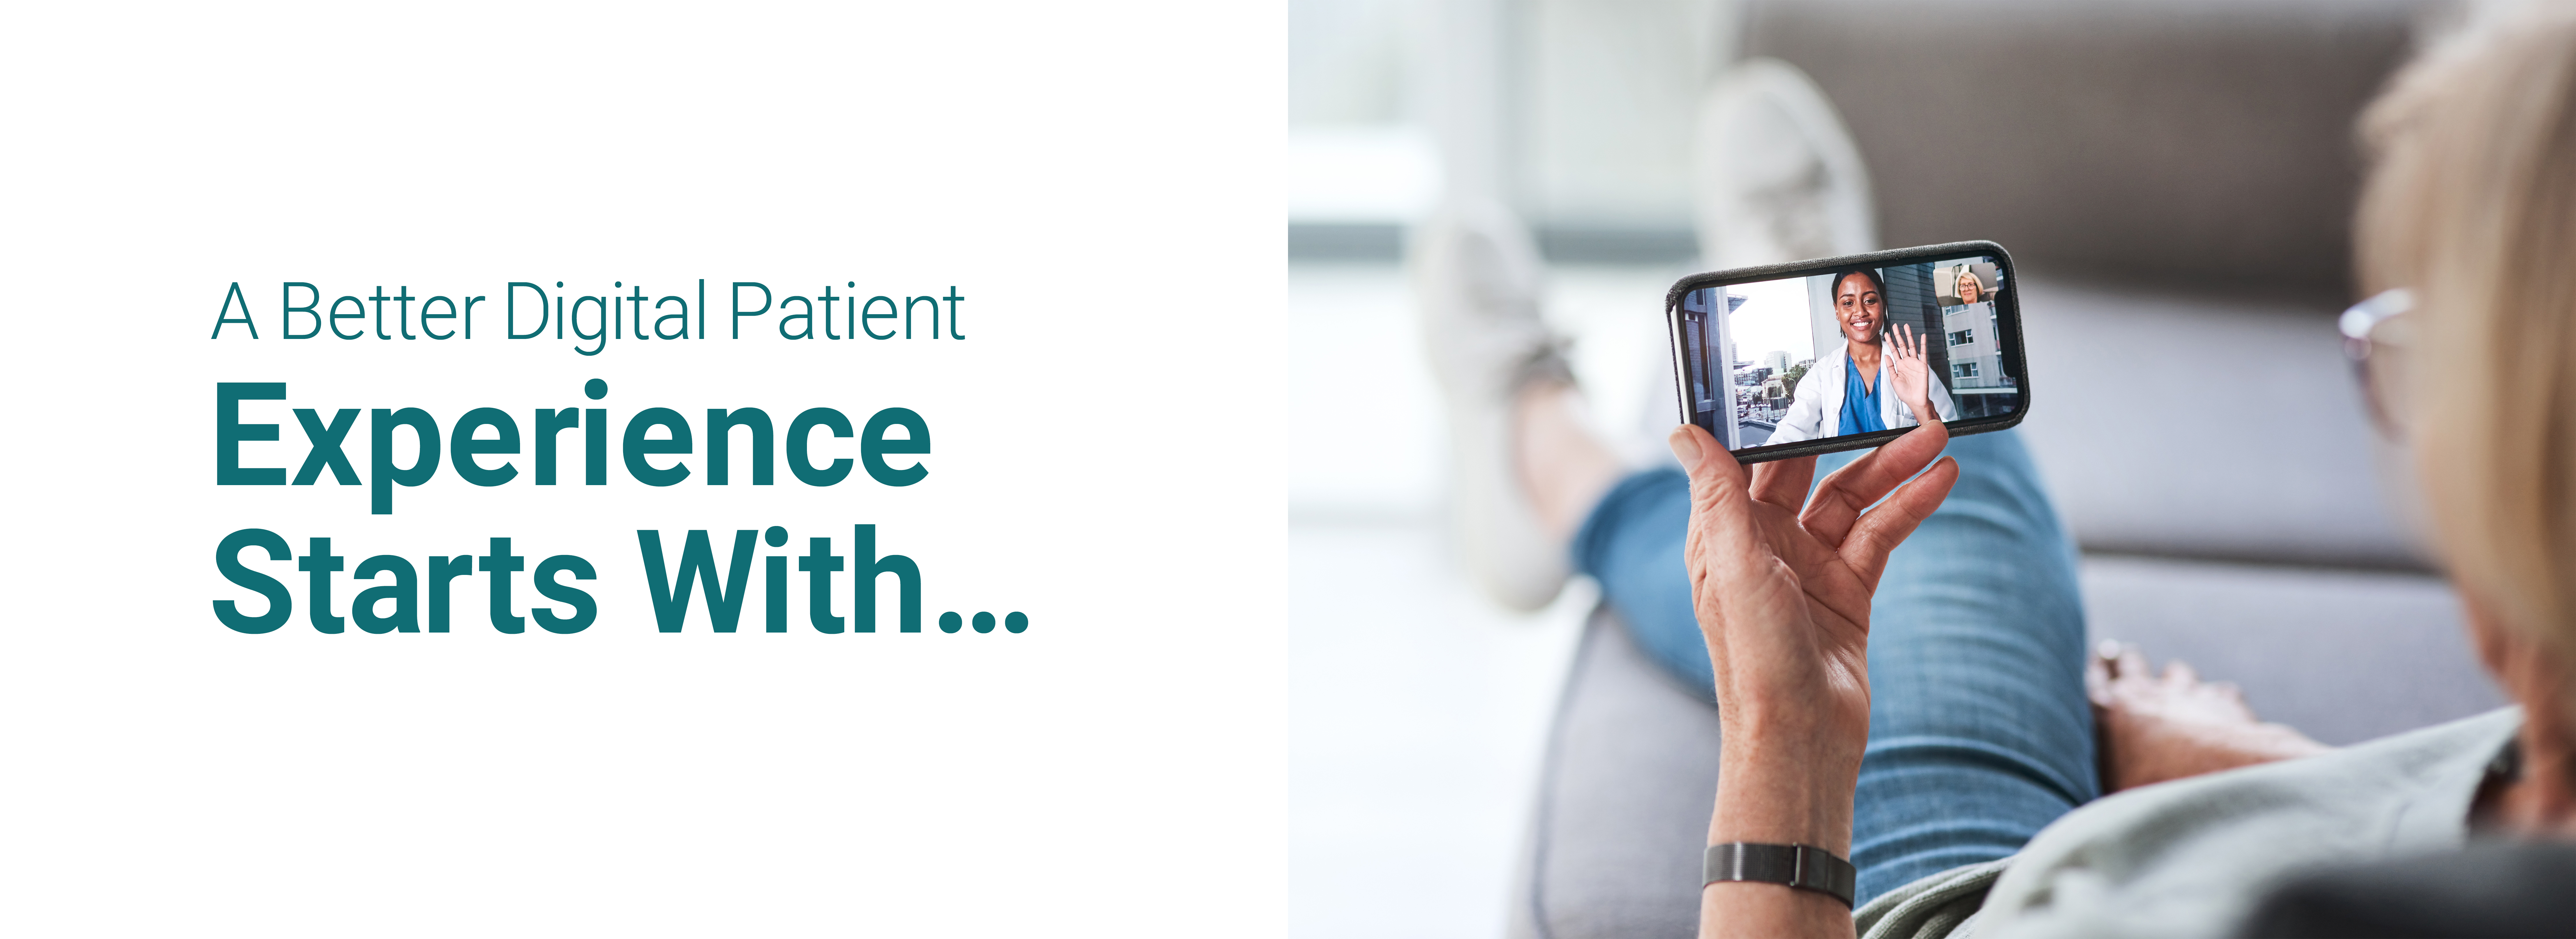 digital patient experience image